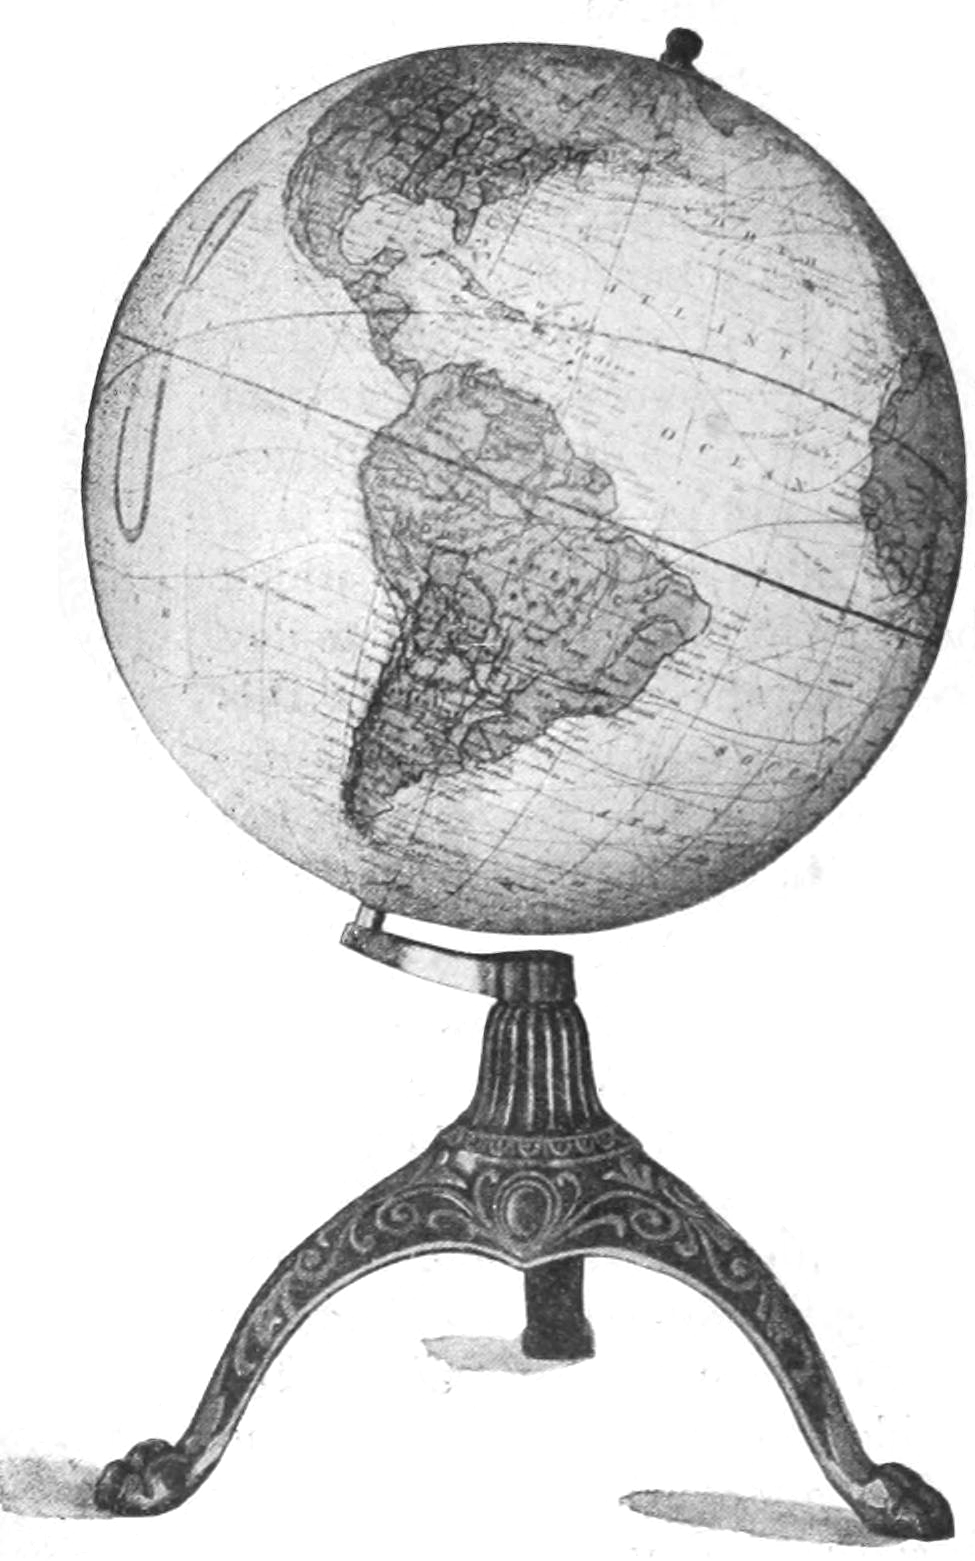 16 Black World Globe on a Black Stand